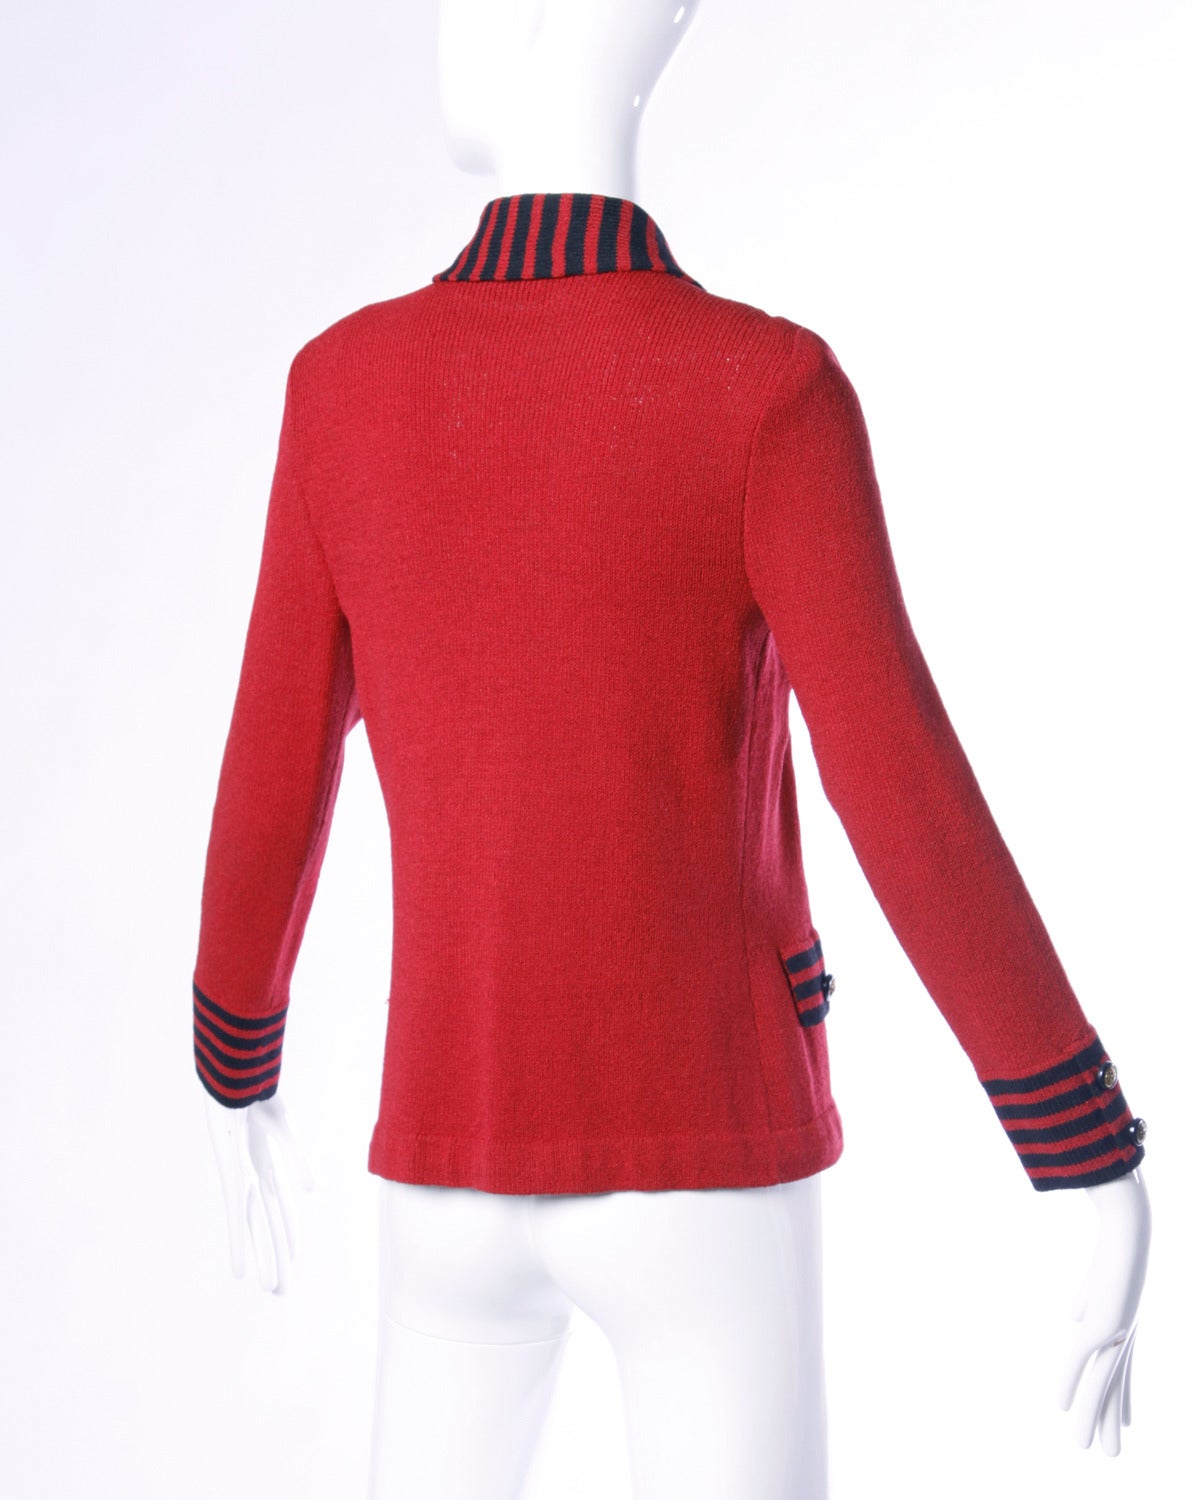 Adolfo Vintage Red & Black Striped Knit Cardigan Sweater or Suit Jacket 1